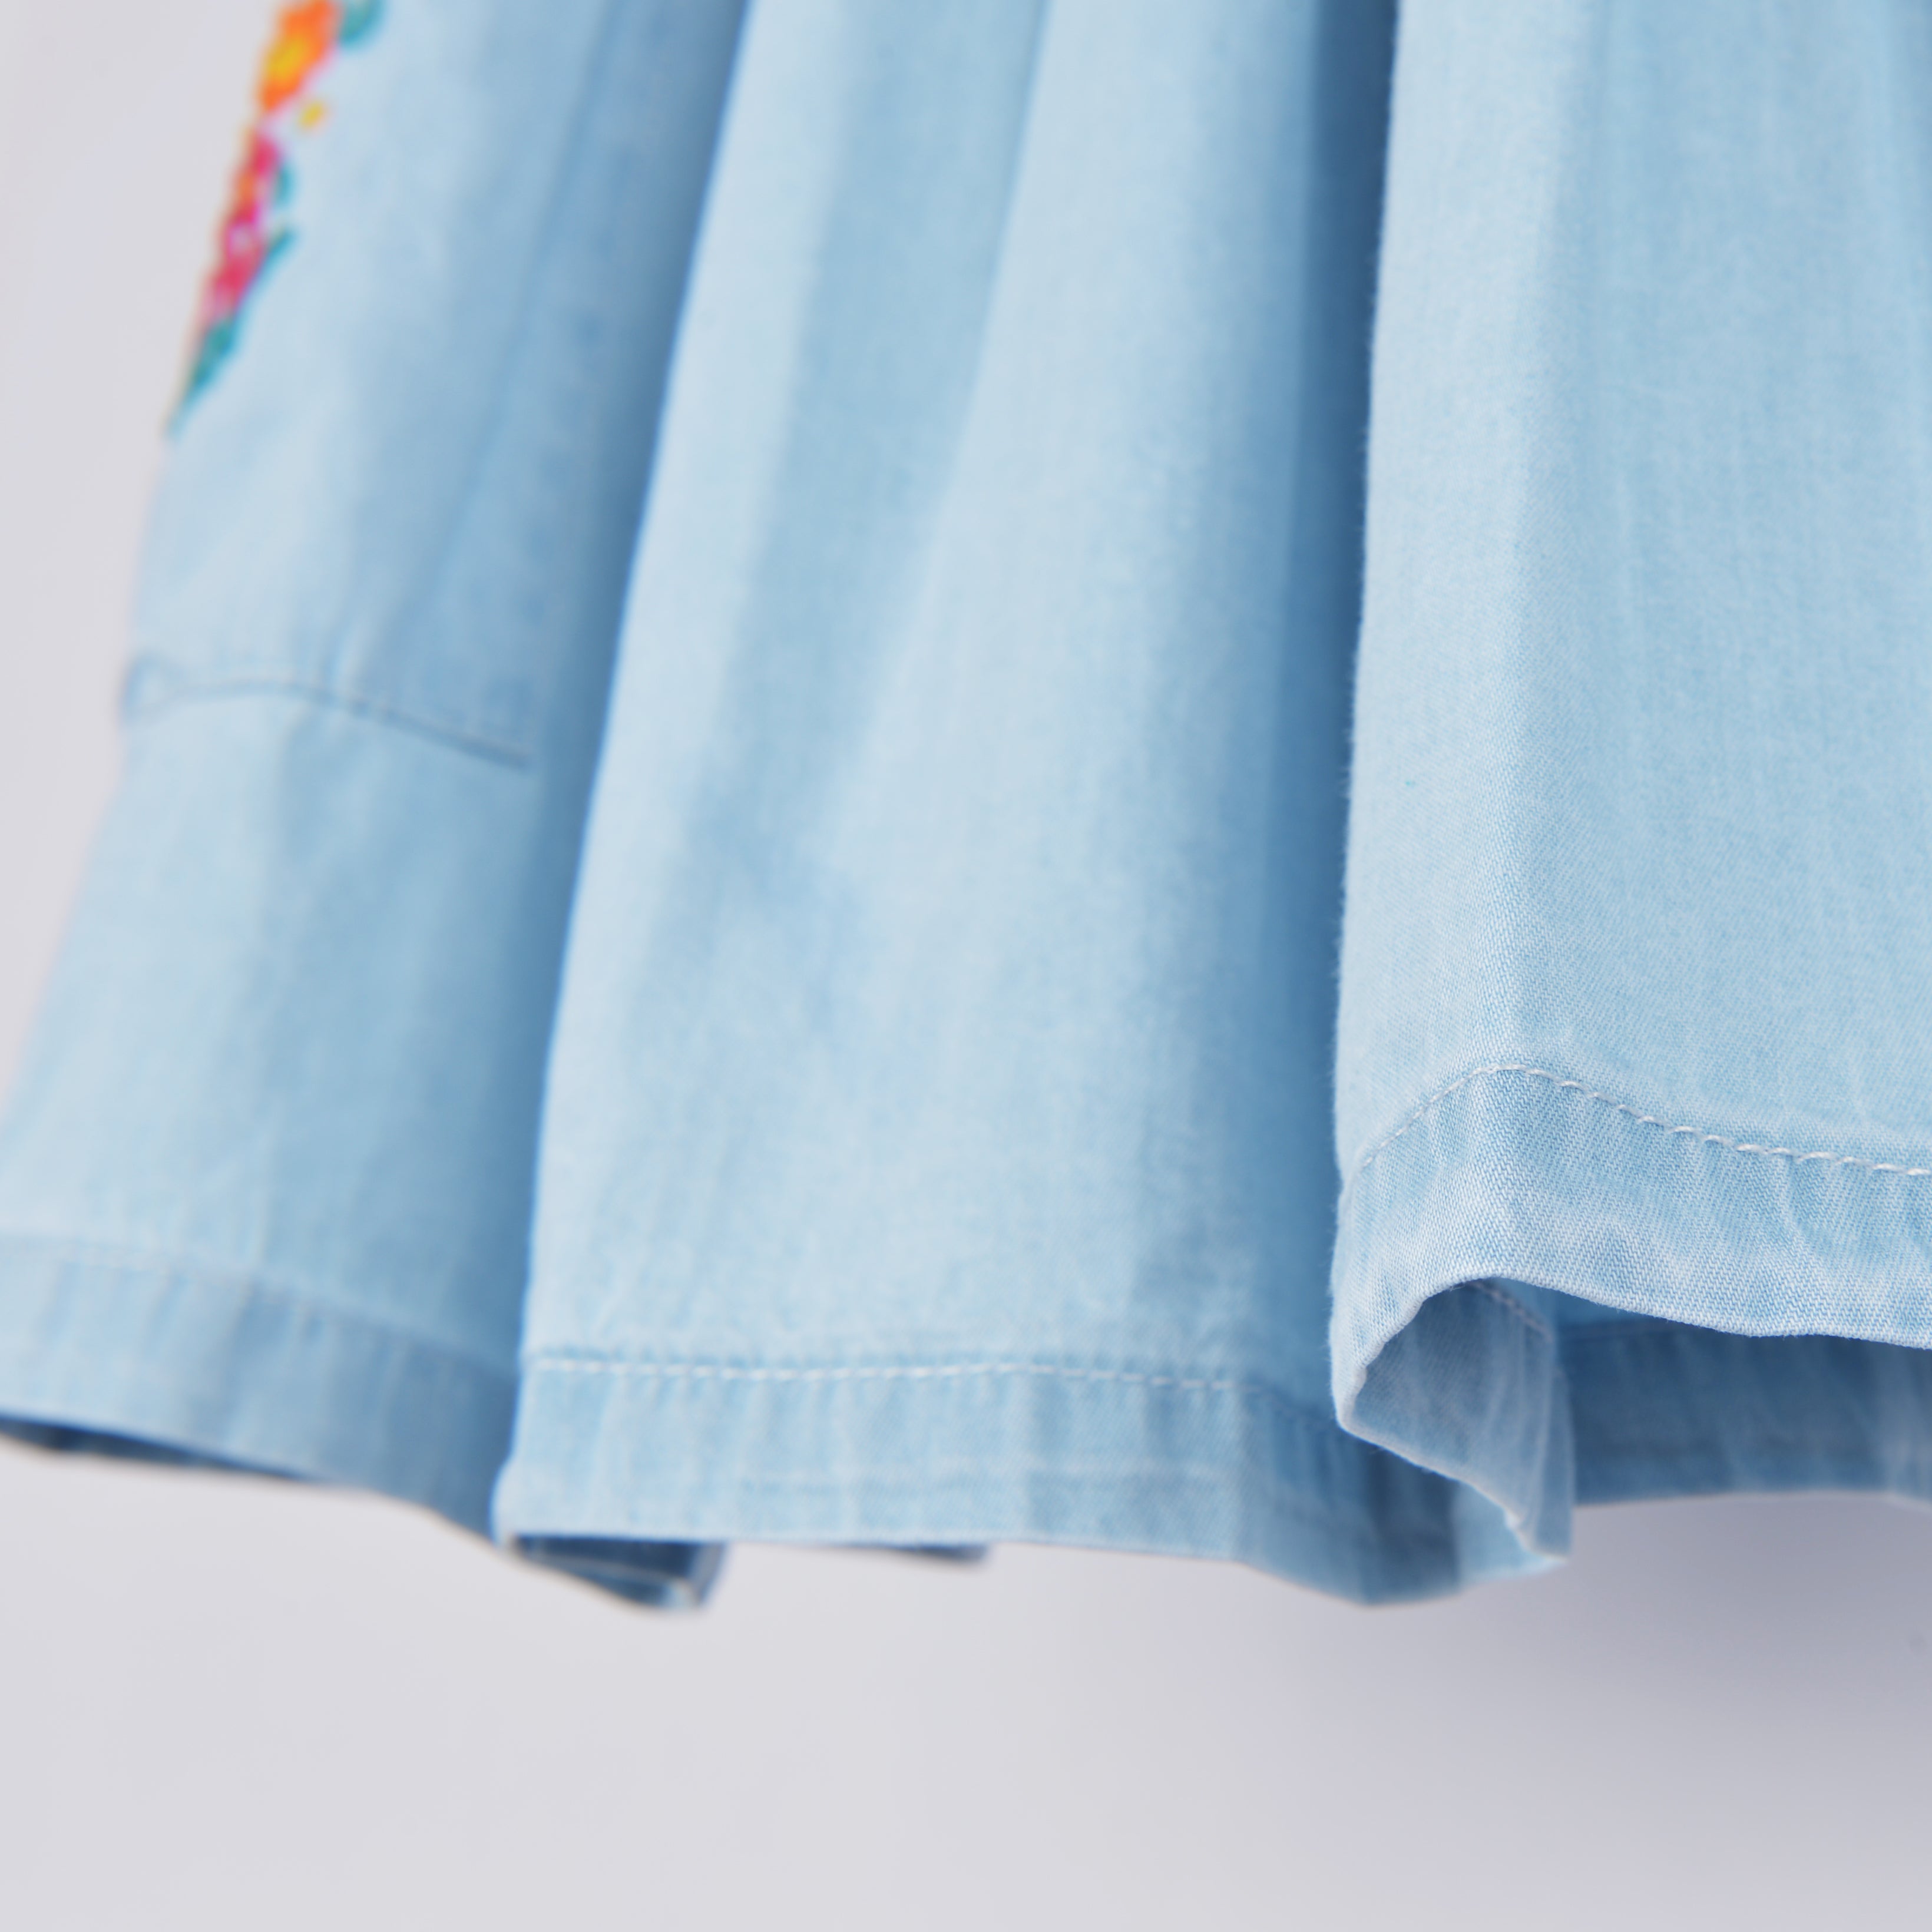 Girls Denim Blue Cotton Embroidered Skirt